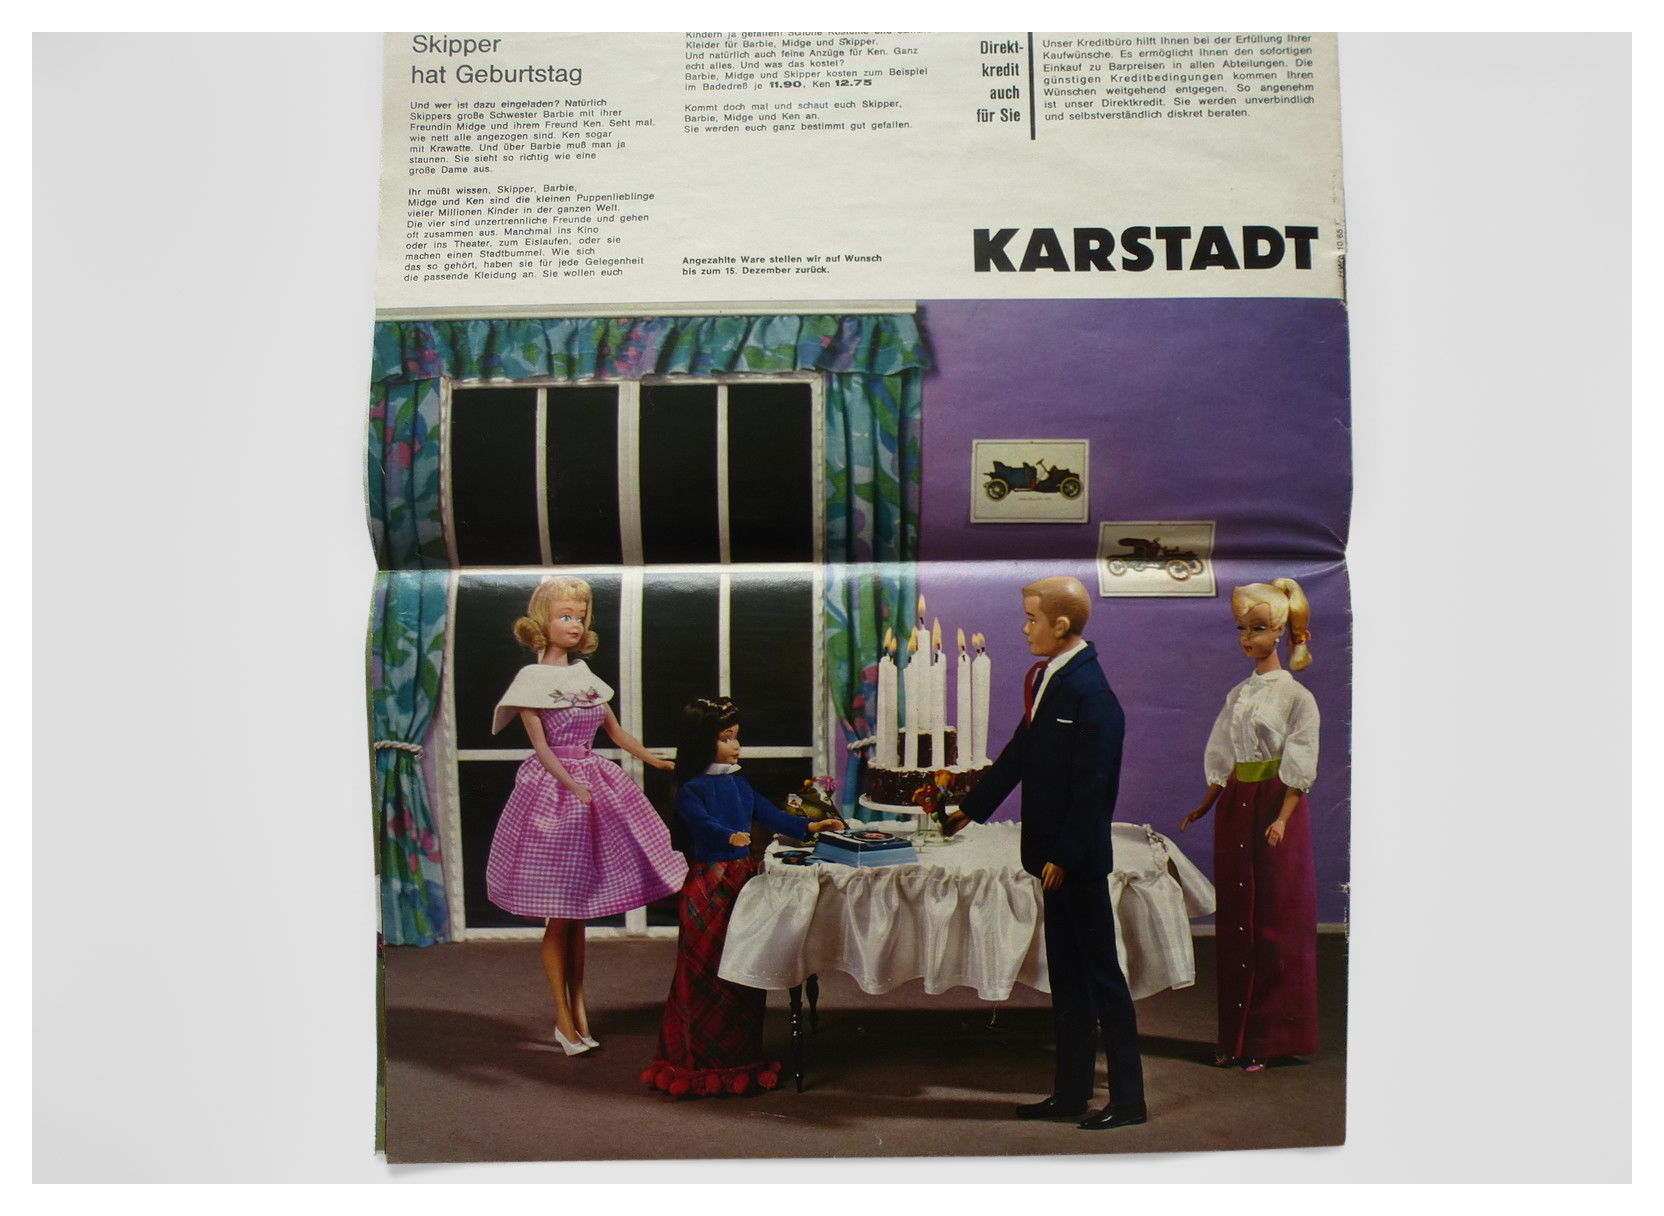 1965 German Karstadt toy catalogue